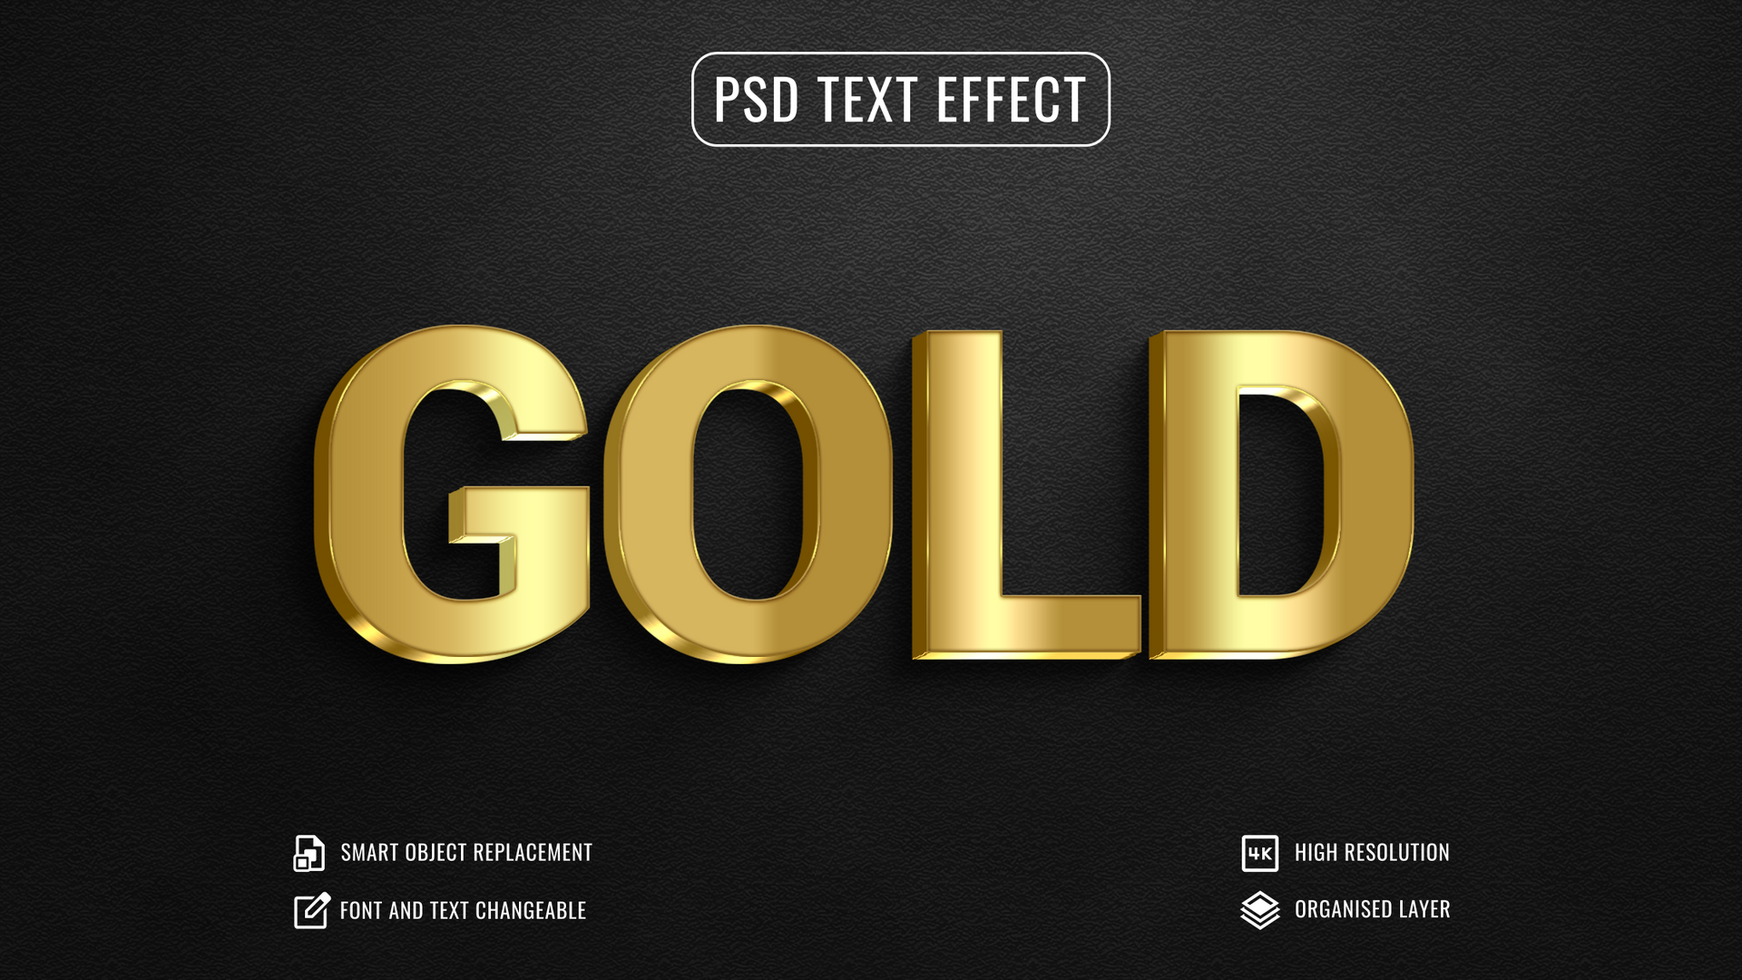 Gold 3d editable shiny text effect template psd